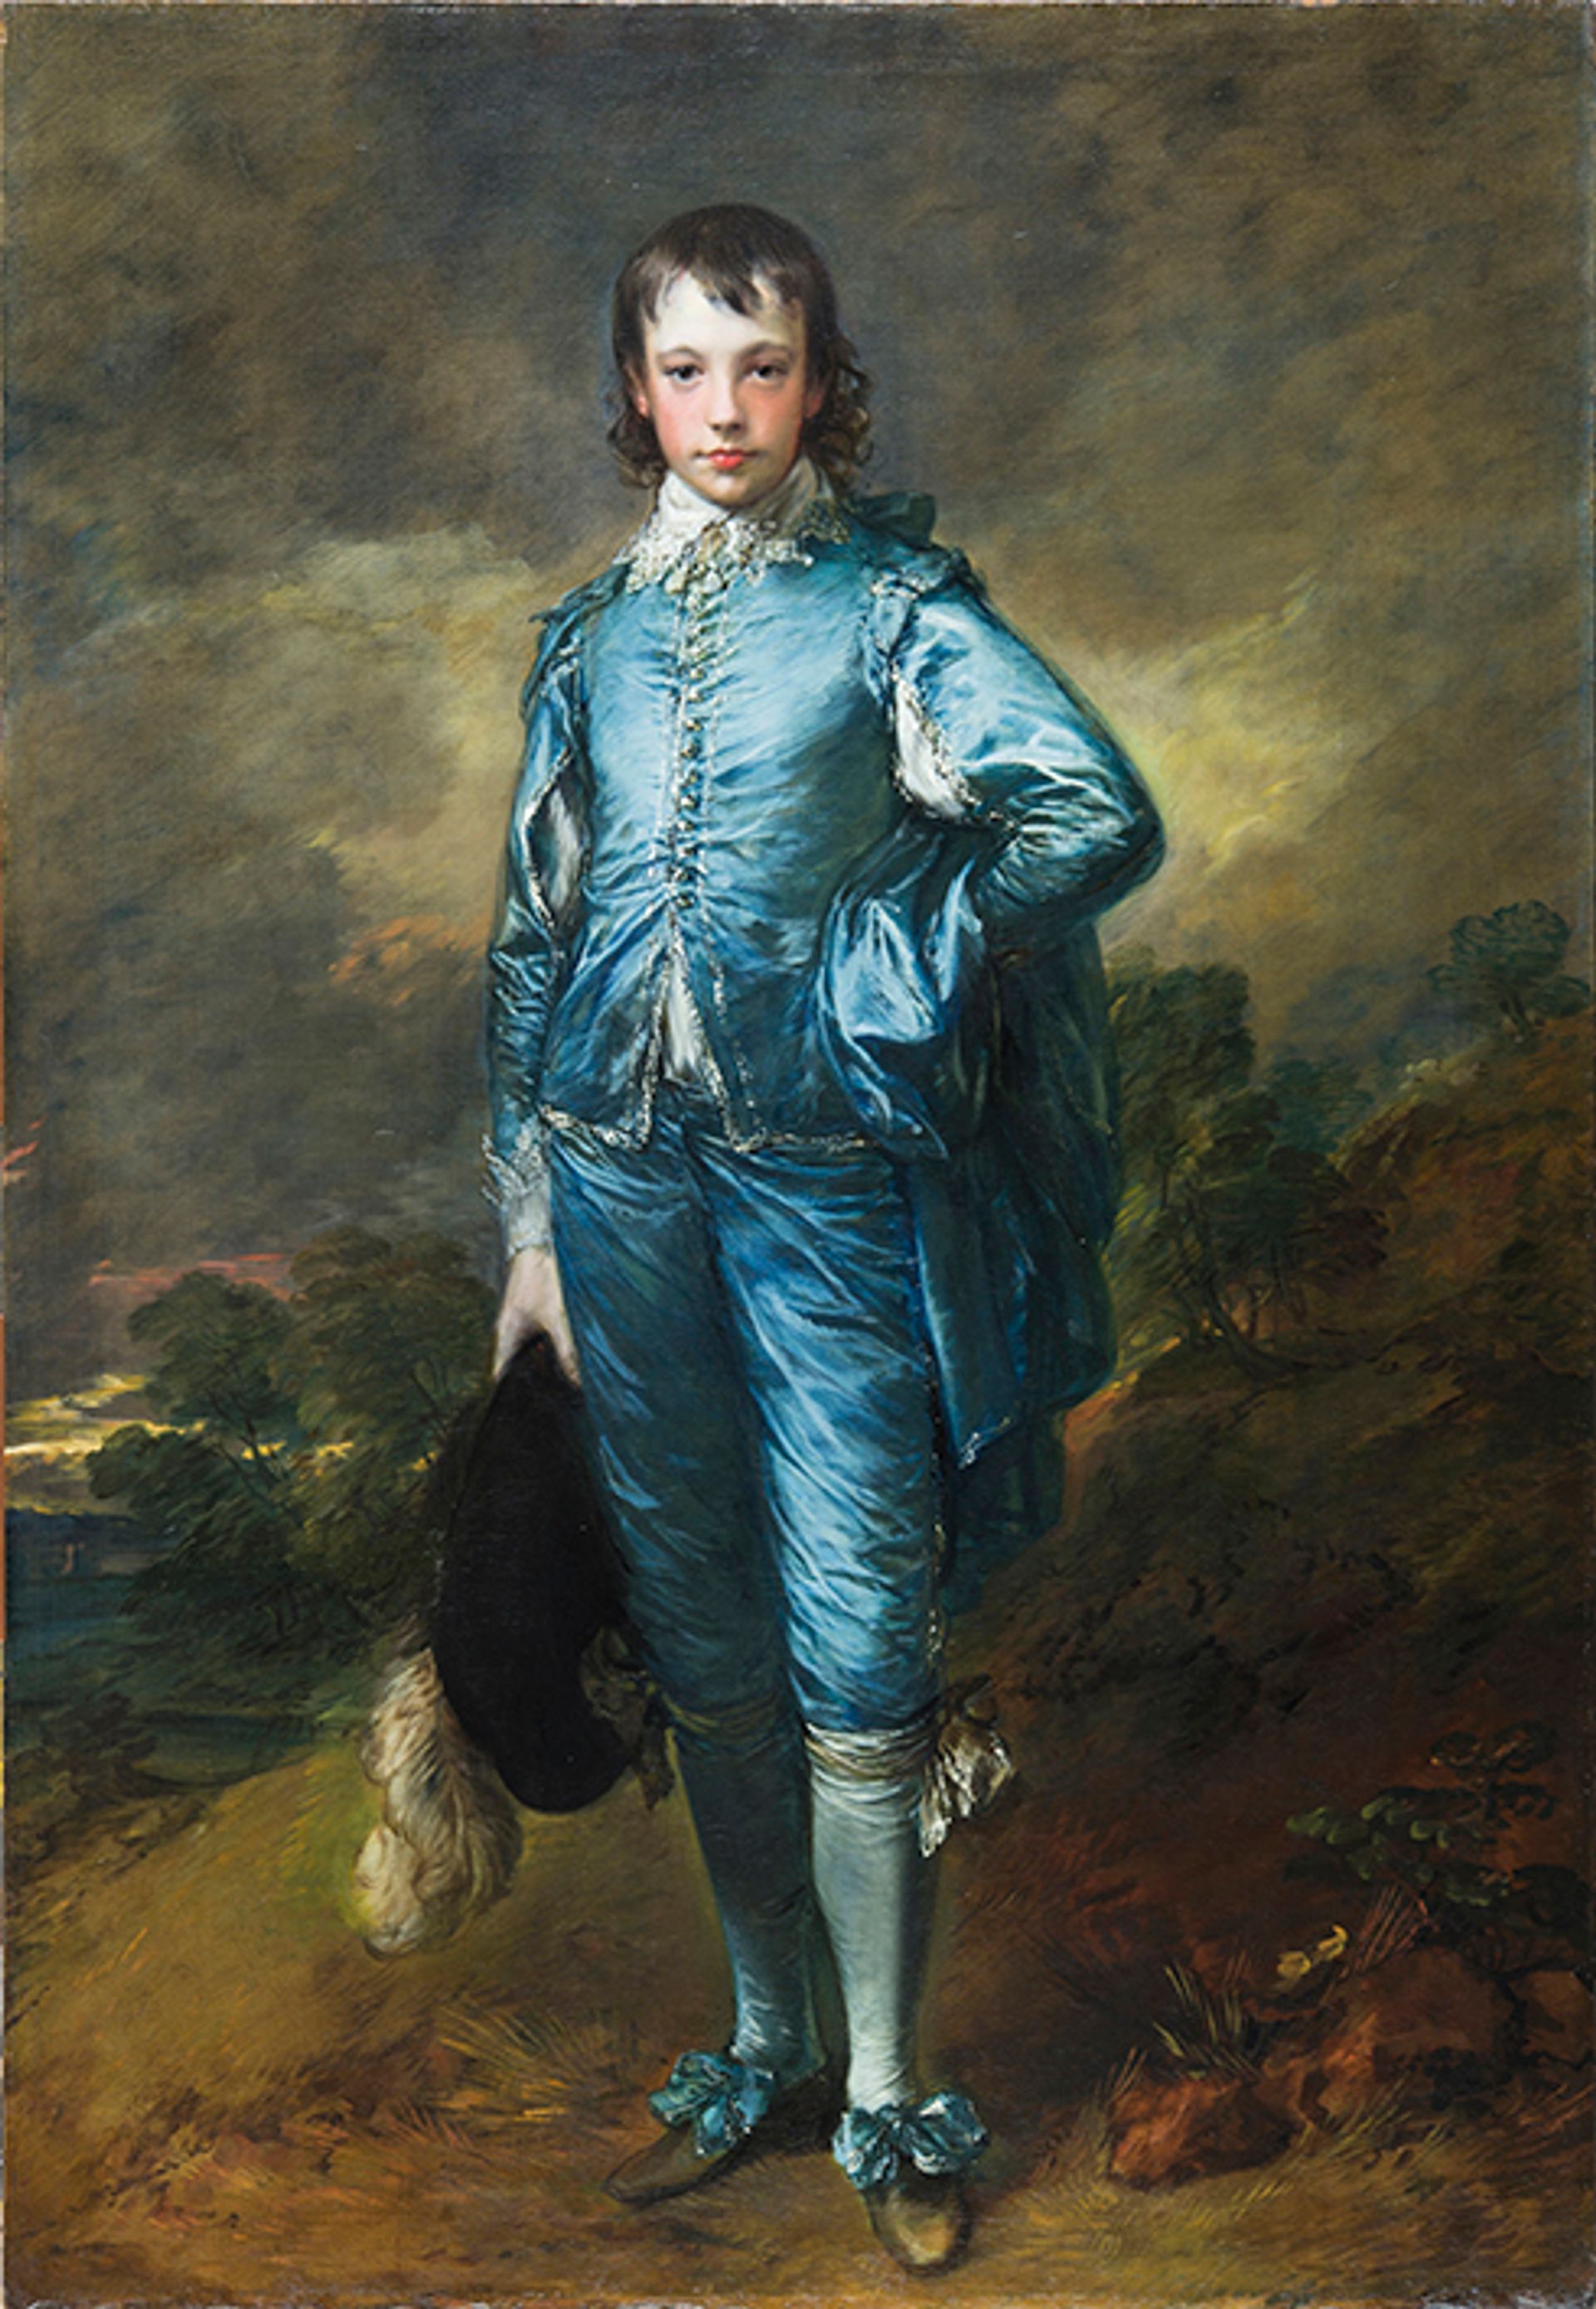 Thomas Gainsborough, The Blue Boy (1770) © Courtesy of the Huntington Art Museum, San Marino, California